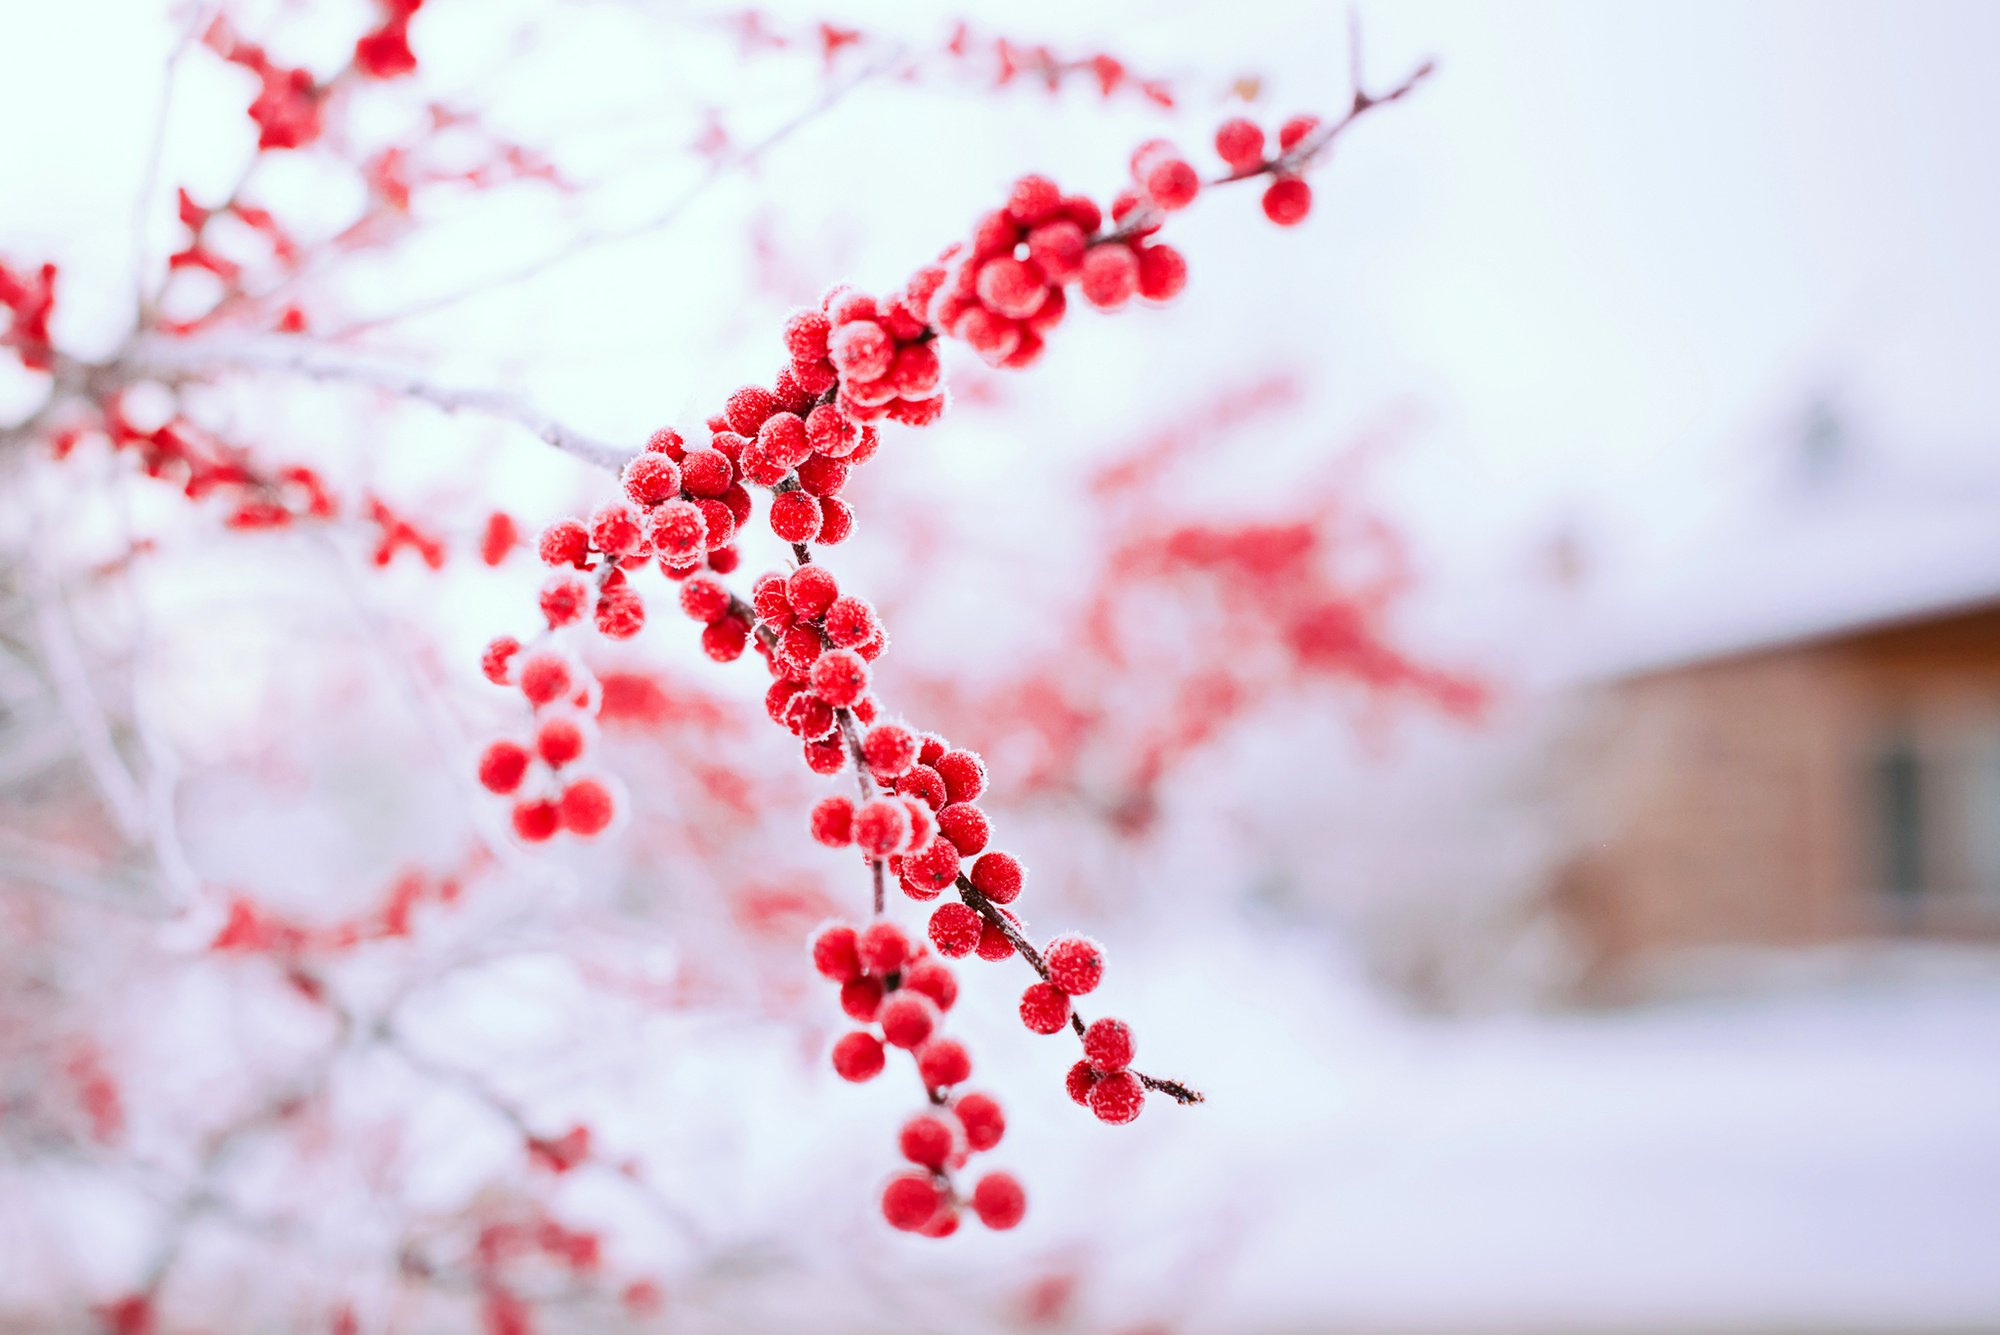 Winter Red Berries Tree Branch Bokeh Wallpaper Background